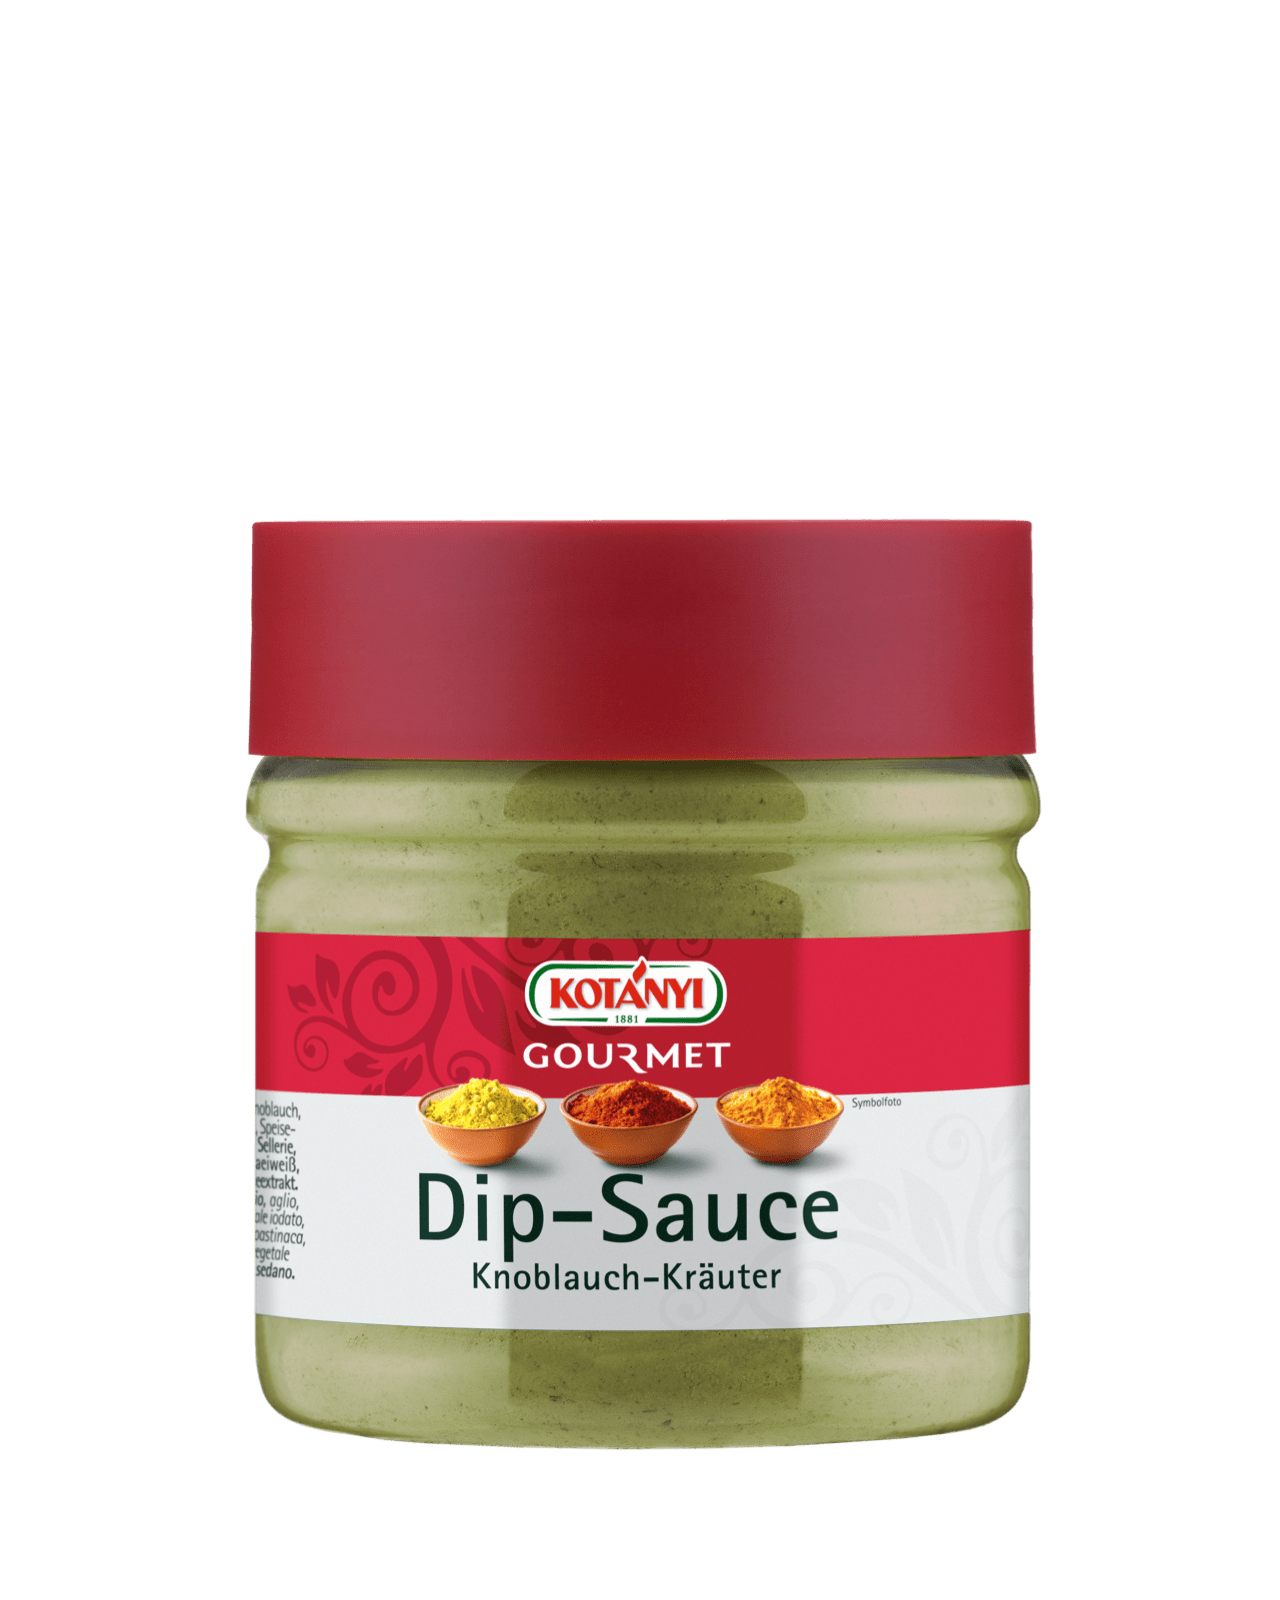 Dip-Sauce Knoblauch-Kräuter | Kotányi Gourmet